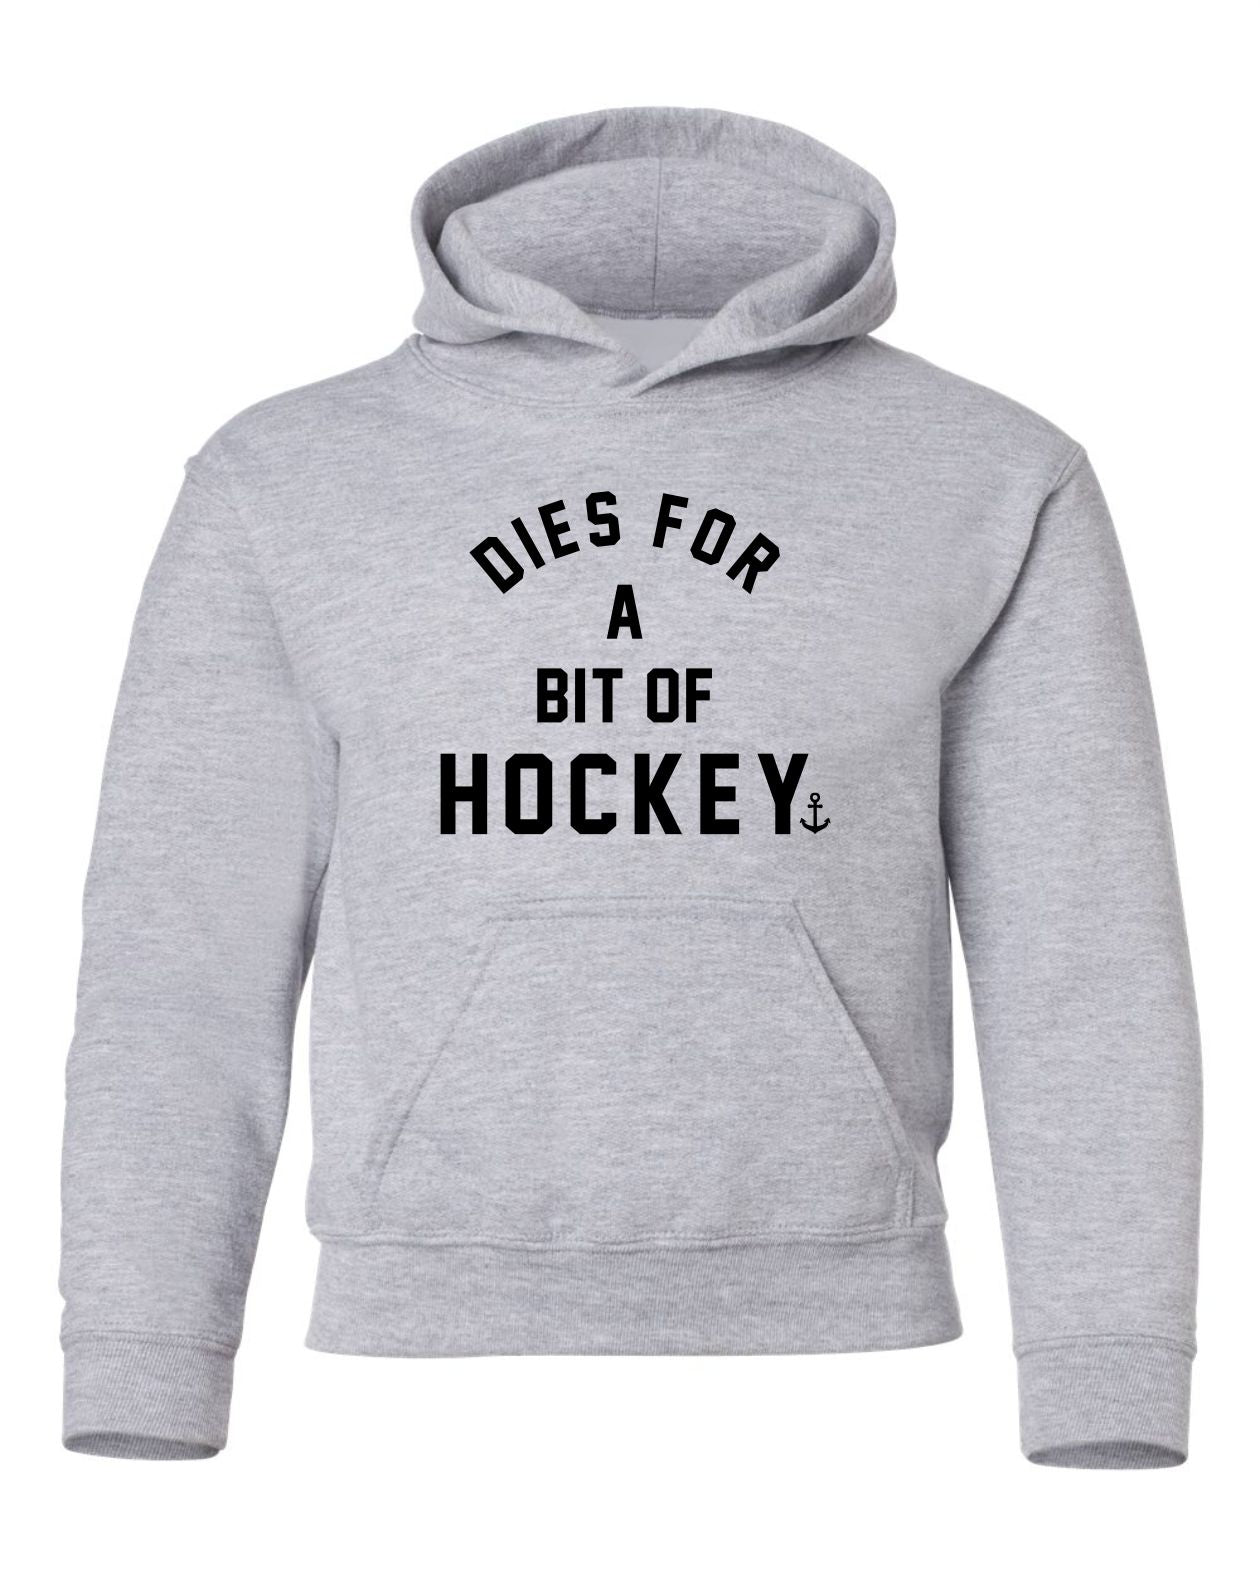 "Dies For A Bit Of Hockey" Youth Hoodie